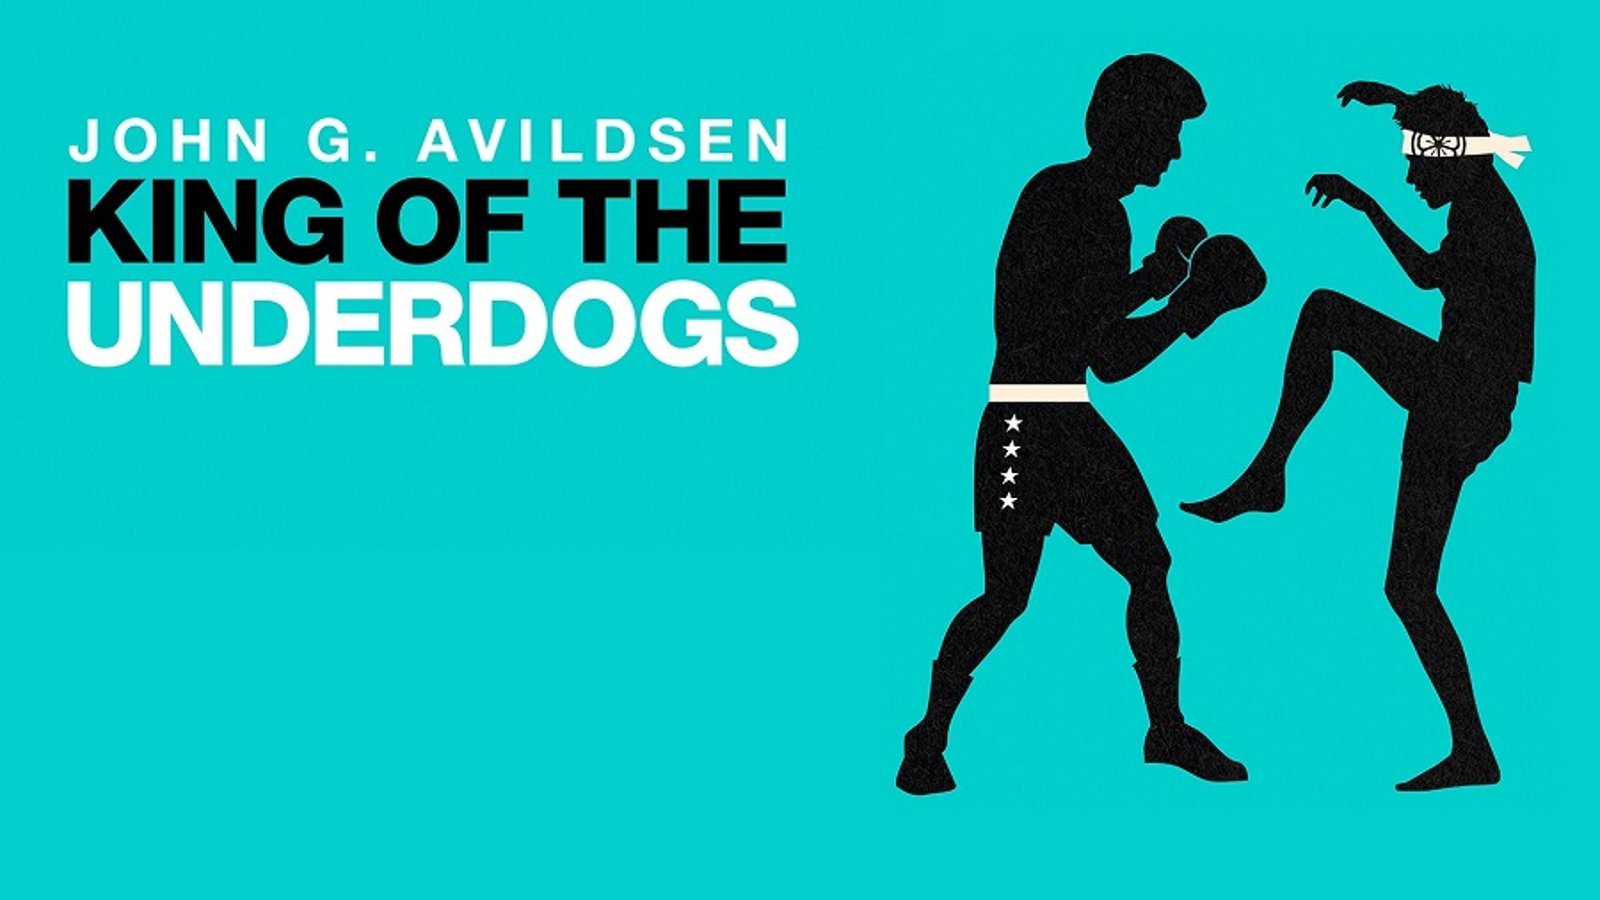 John G. Avildsen: The King of the Underdogs - Examination of an Oscar-Winning Director